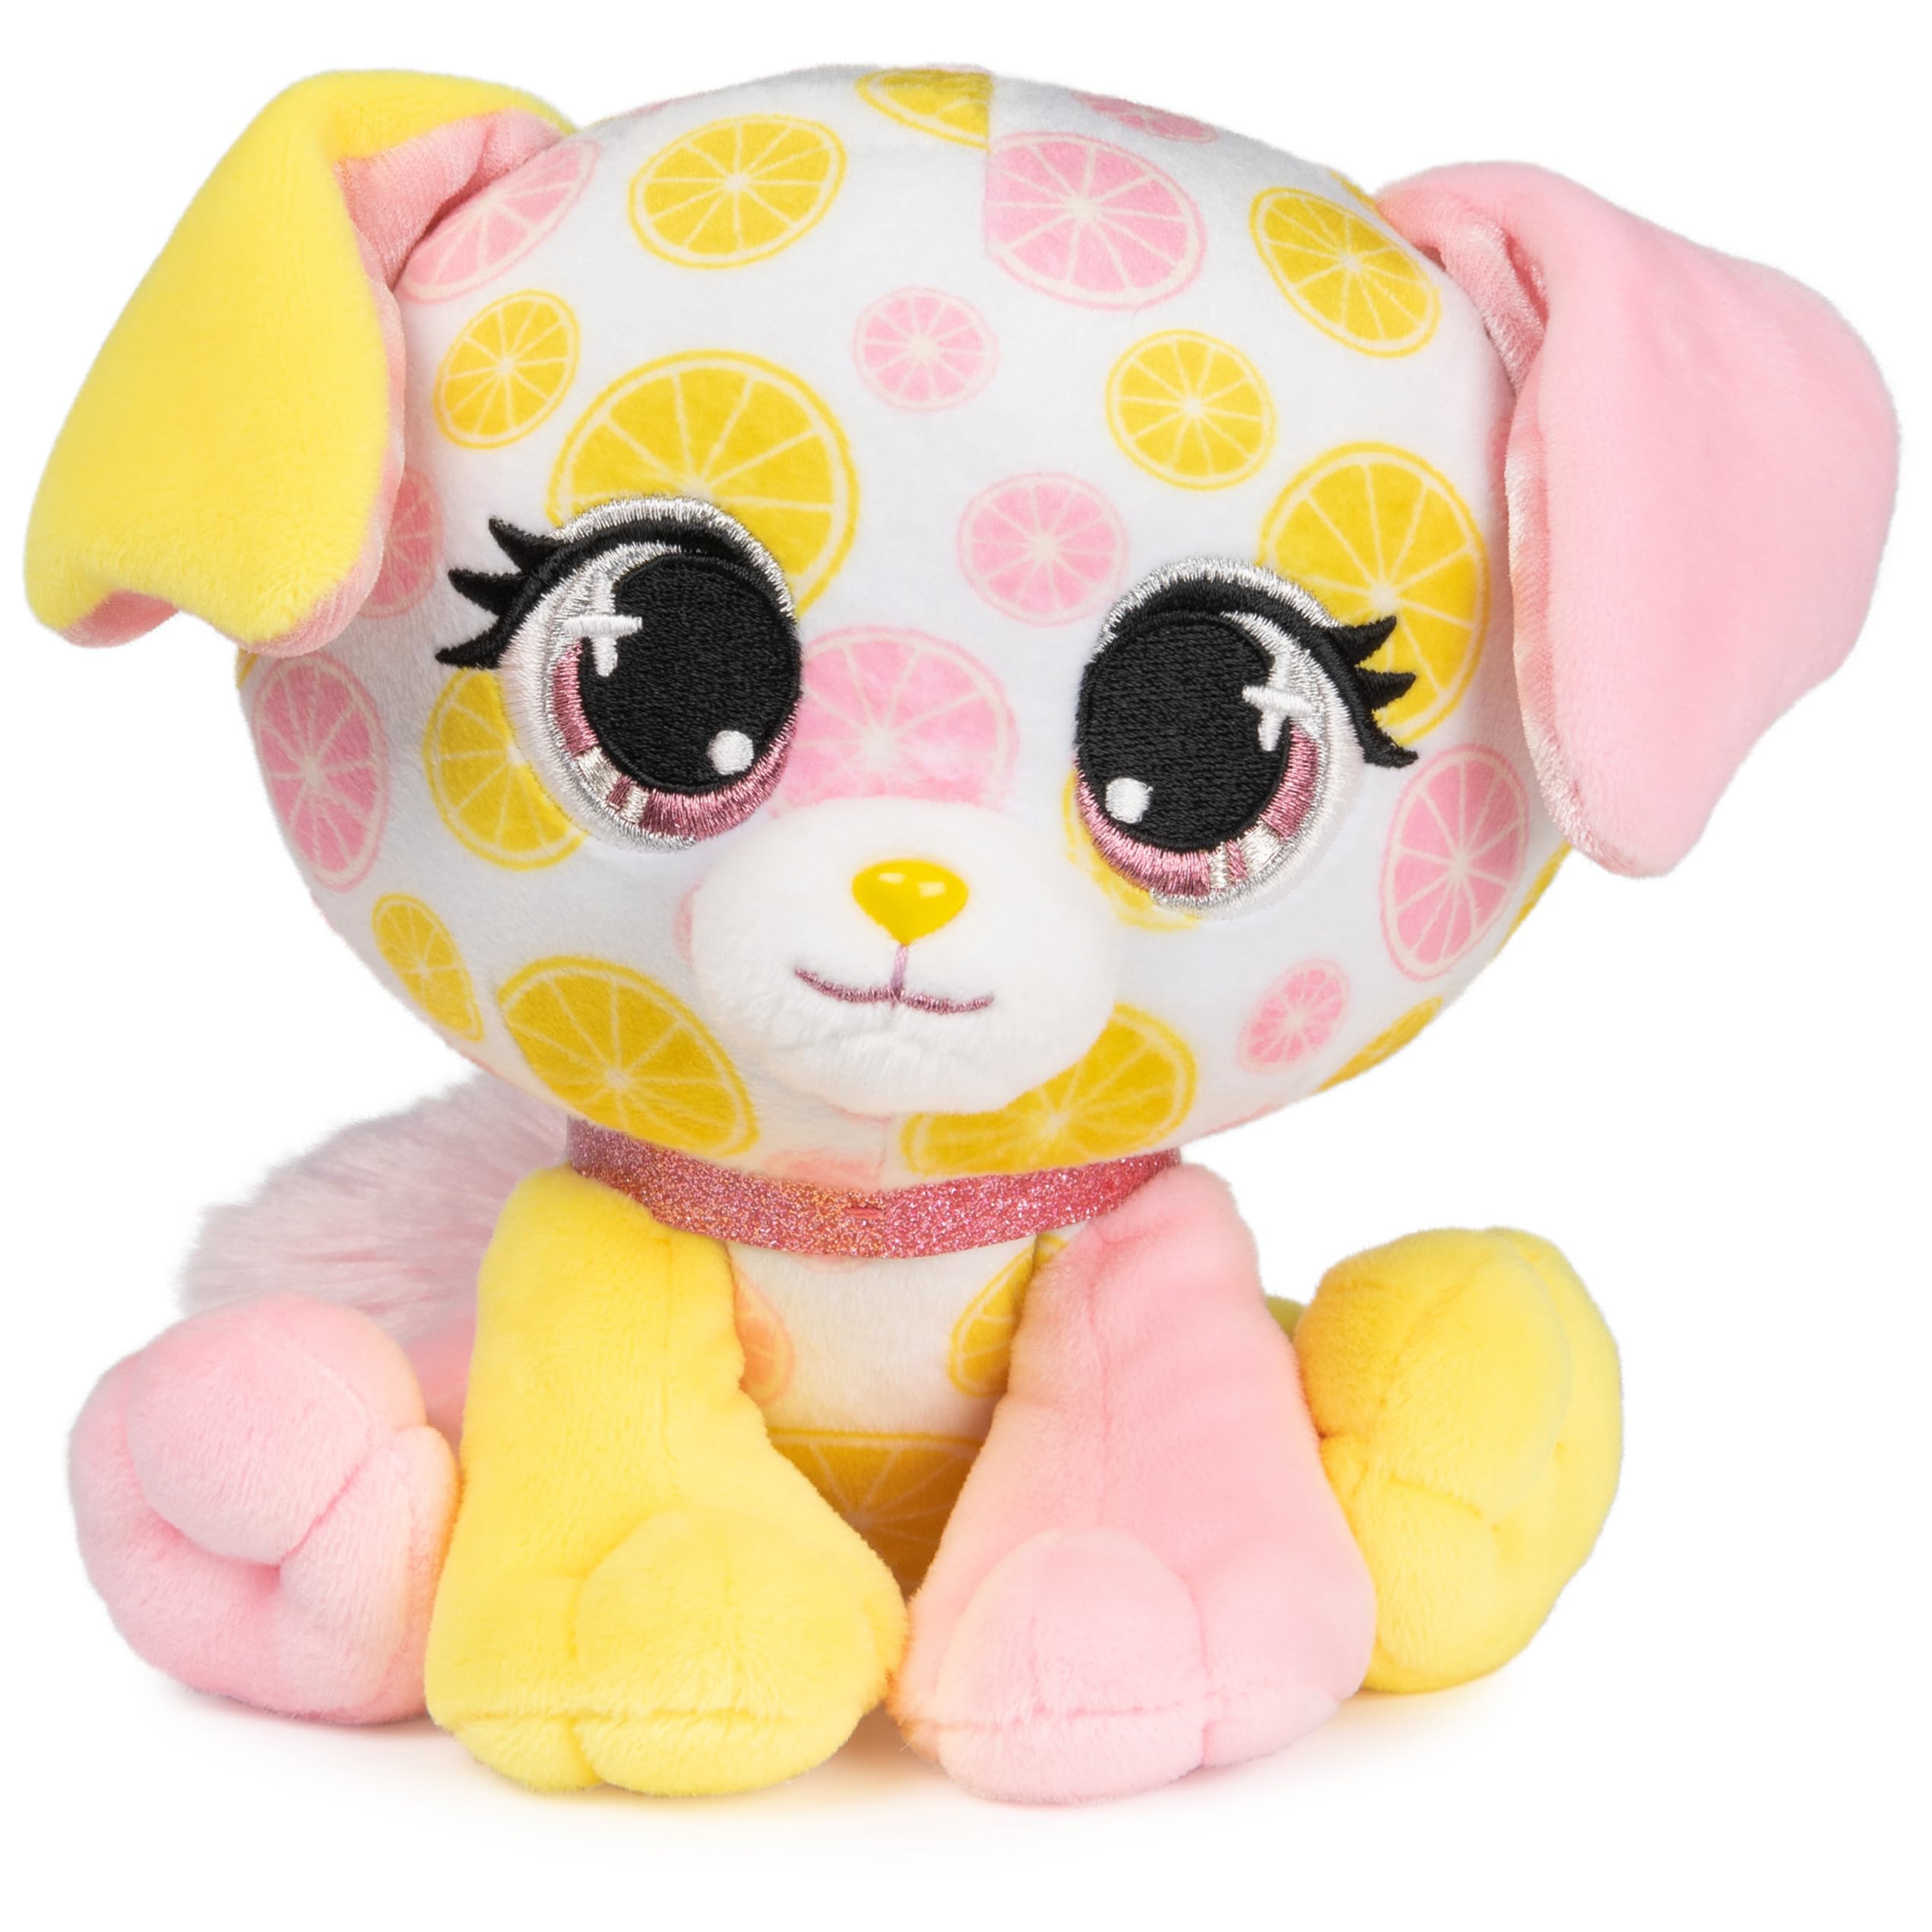 GUND P.Lushes Pets Juicy Jam Collection, Capri Limone Puppy Stuffed Animal, Pink/Yellow, 6”